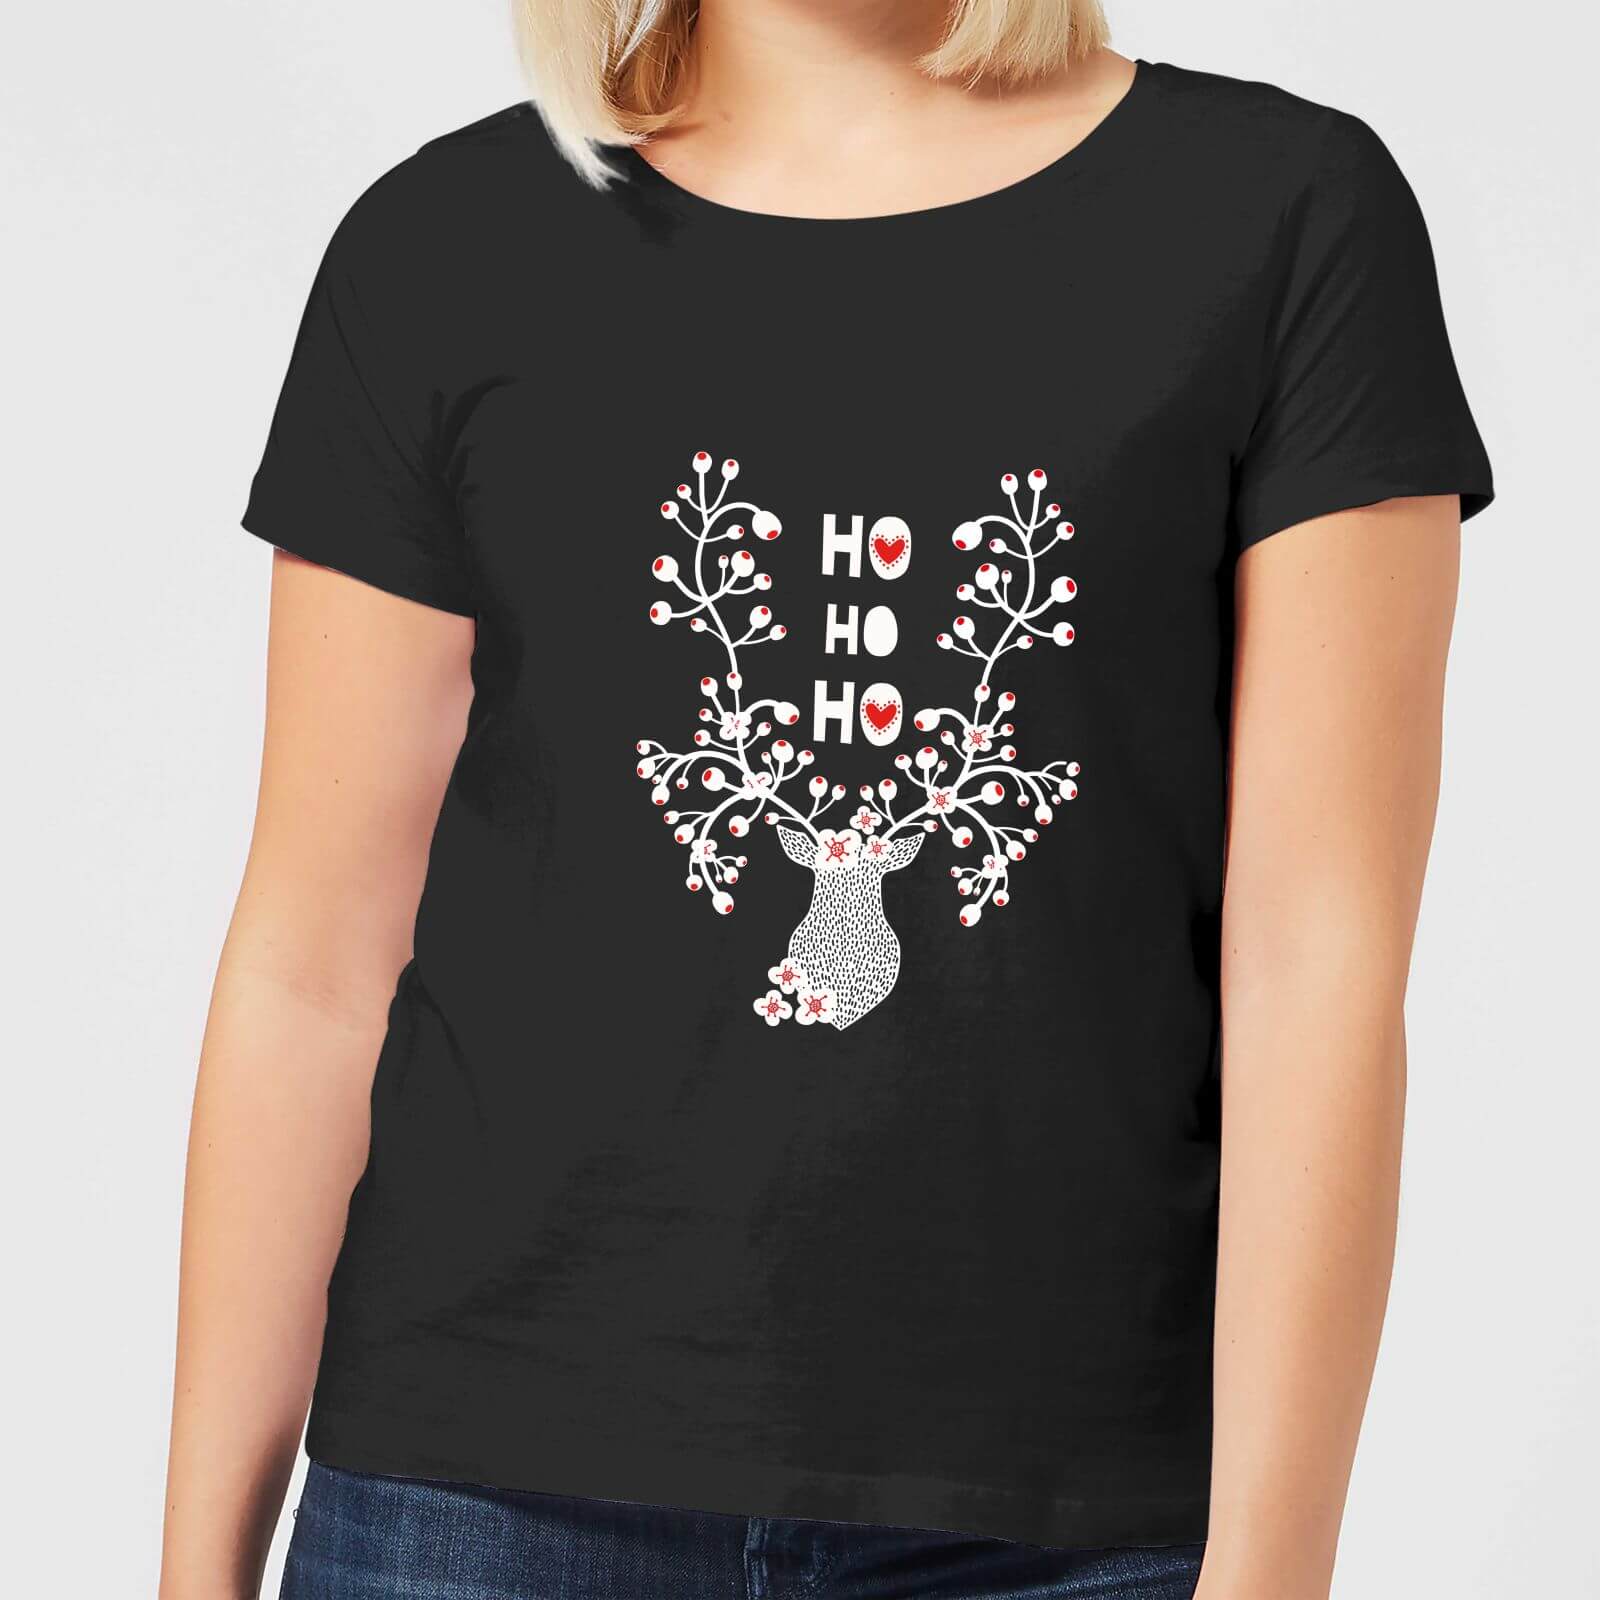 Ho Ho Ho Reindeer Women's T-Shirt - Black - 3XL - Black